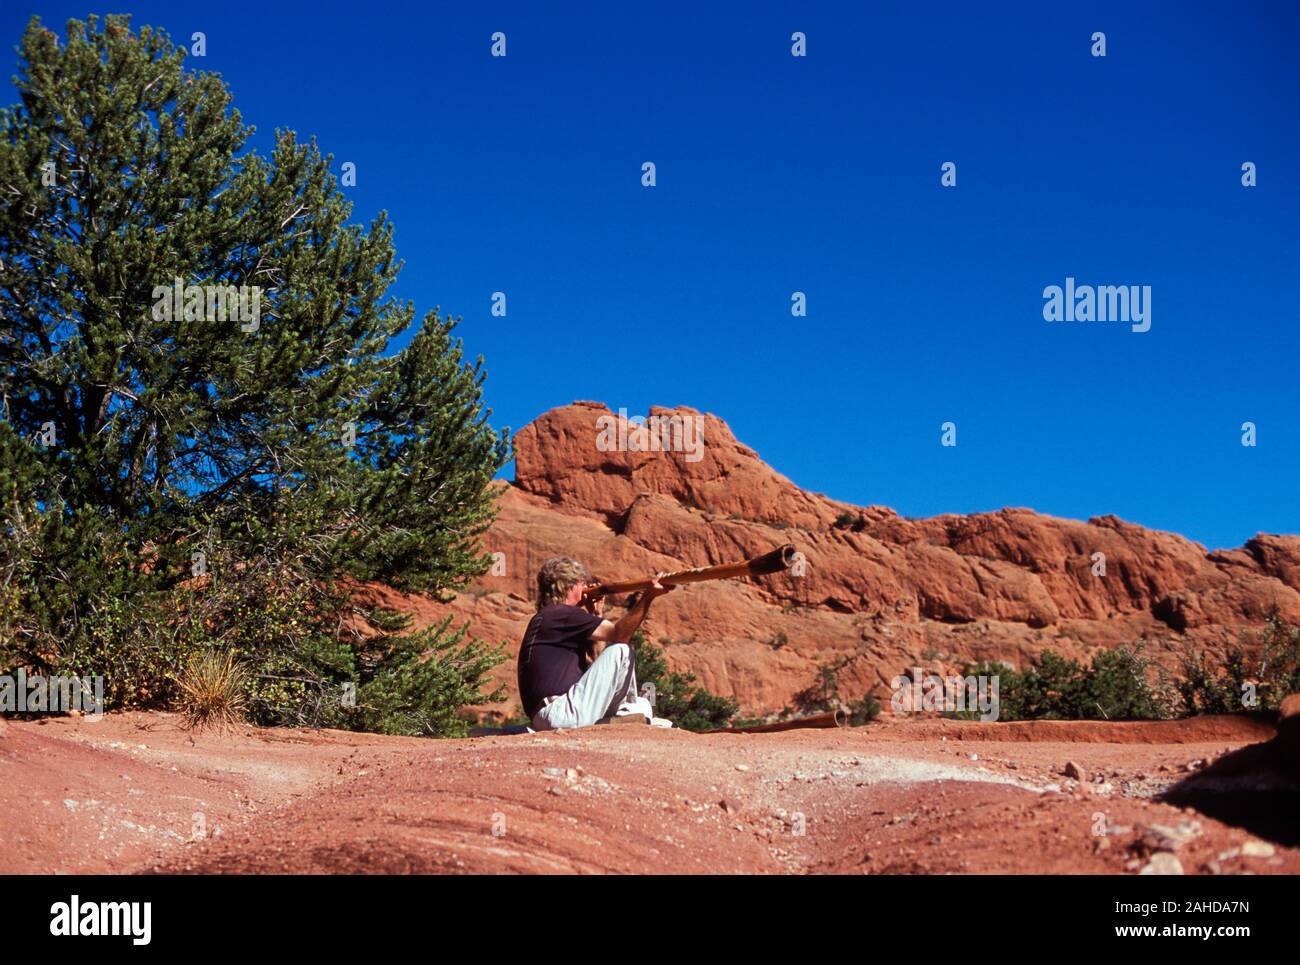 Digideroo Player, Sleeping Giant, Garden of the Gods, Manitou Springs, Colorado Stock Photo